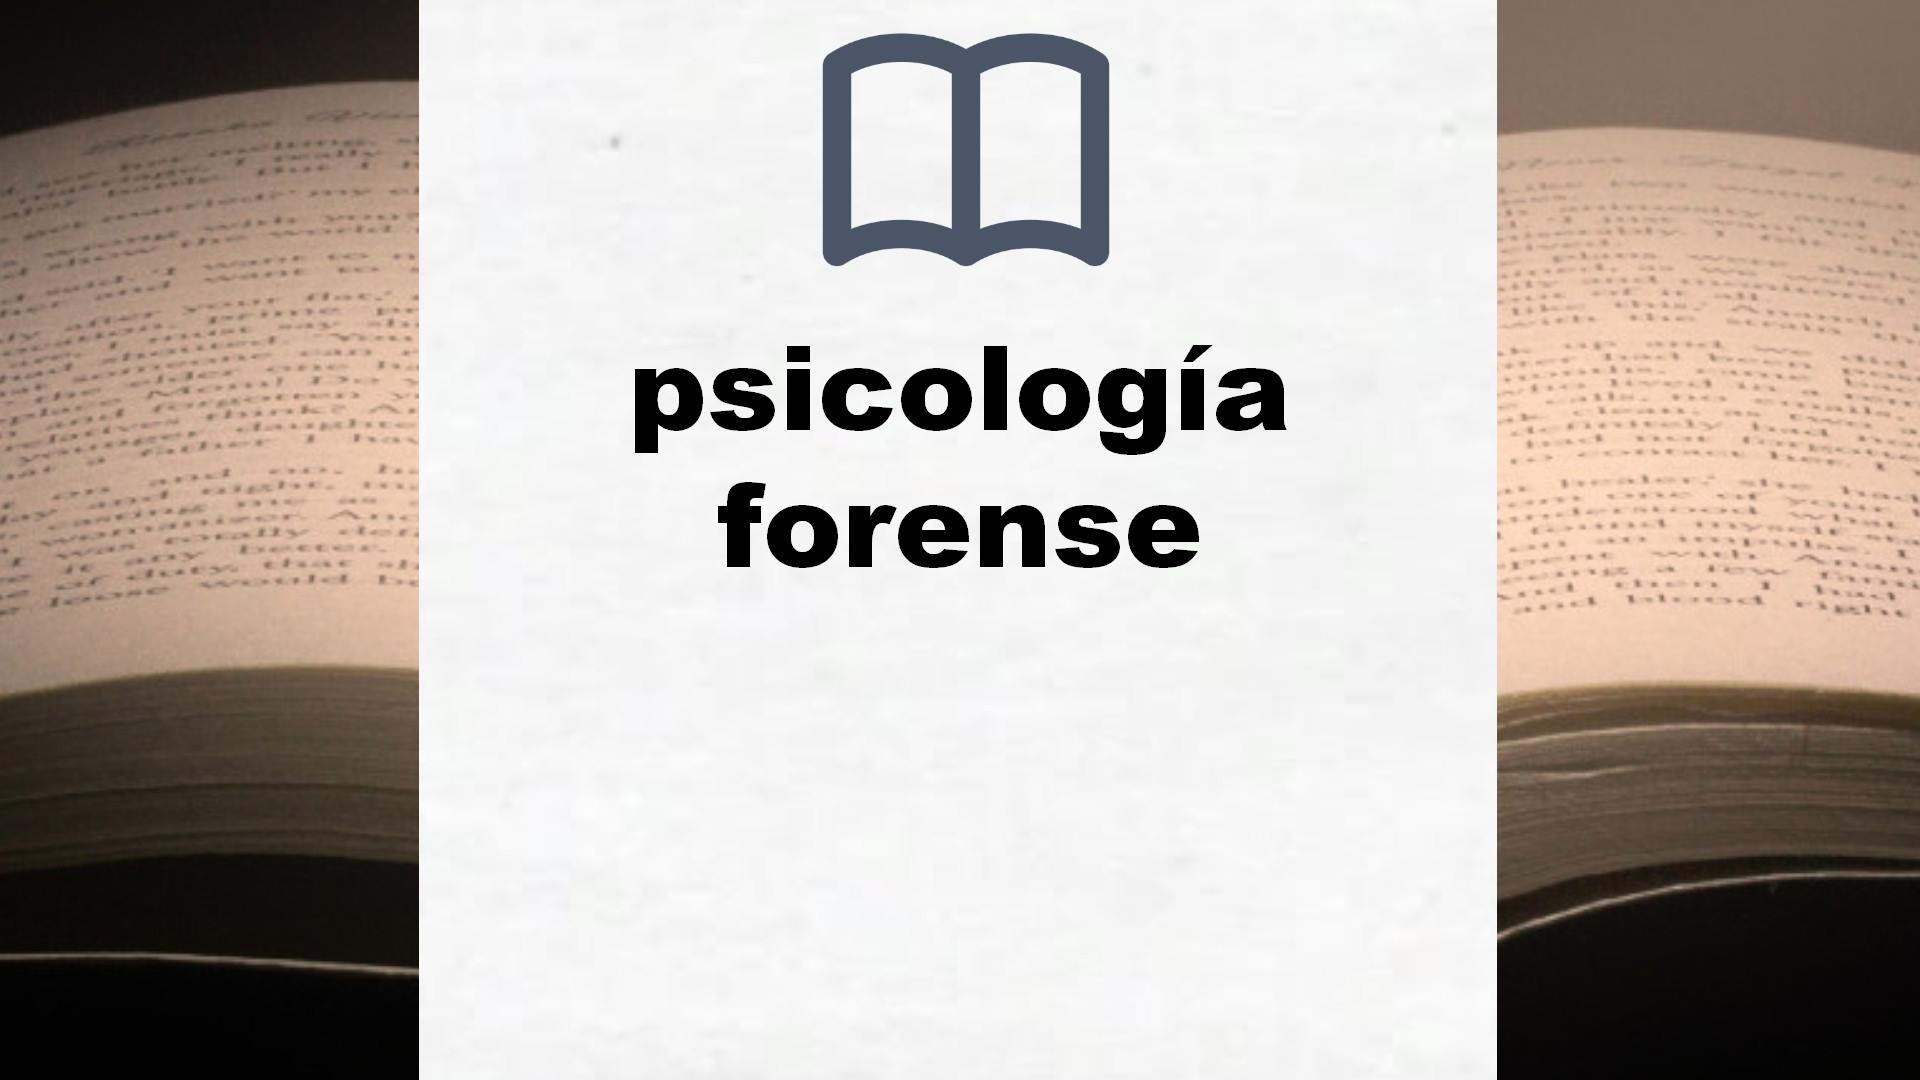 Libros sobre psicología forense